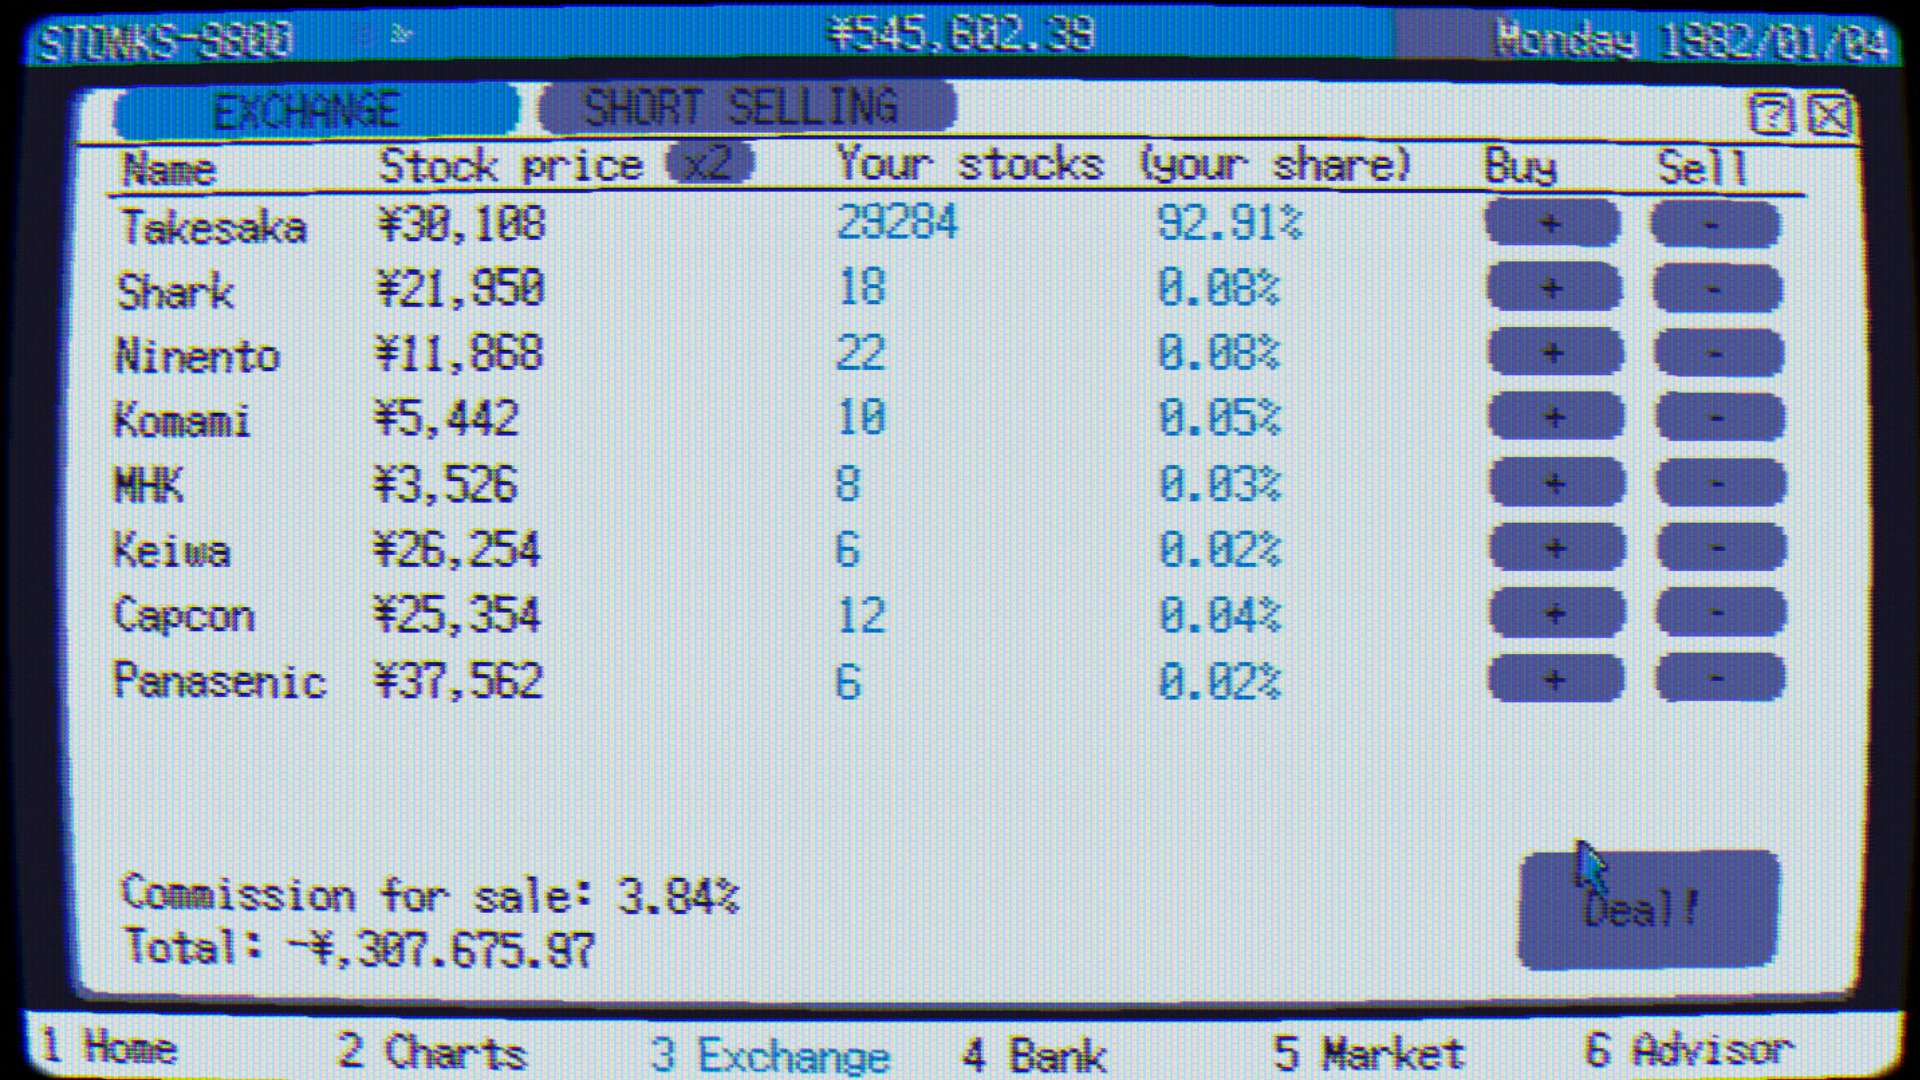 STONKS-9800 stocks purchasing screen